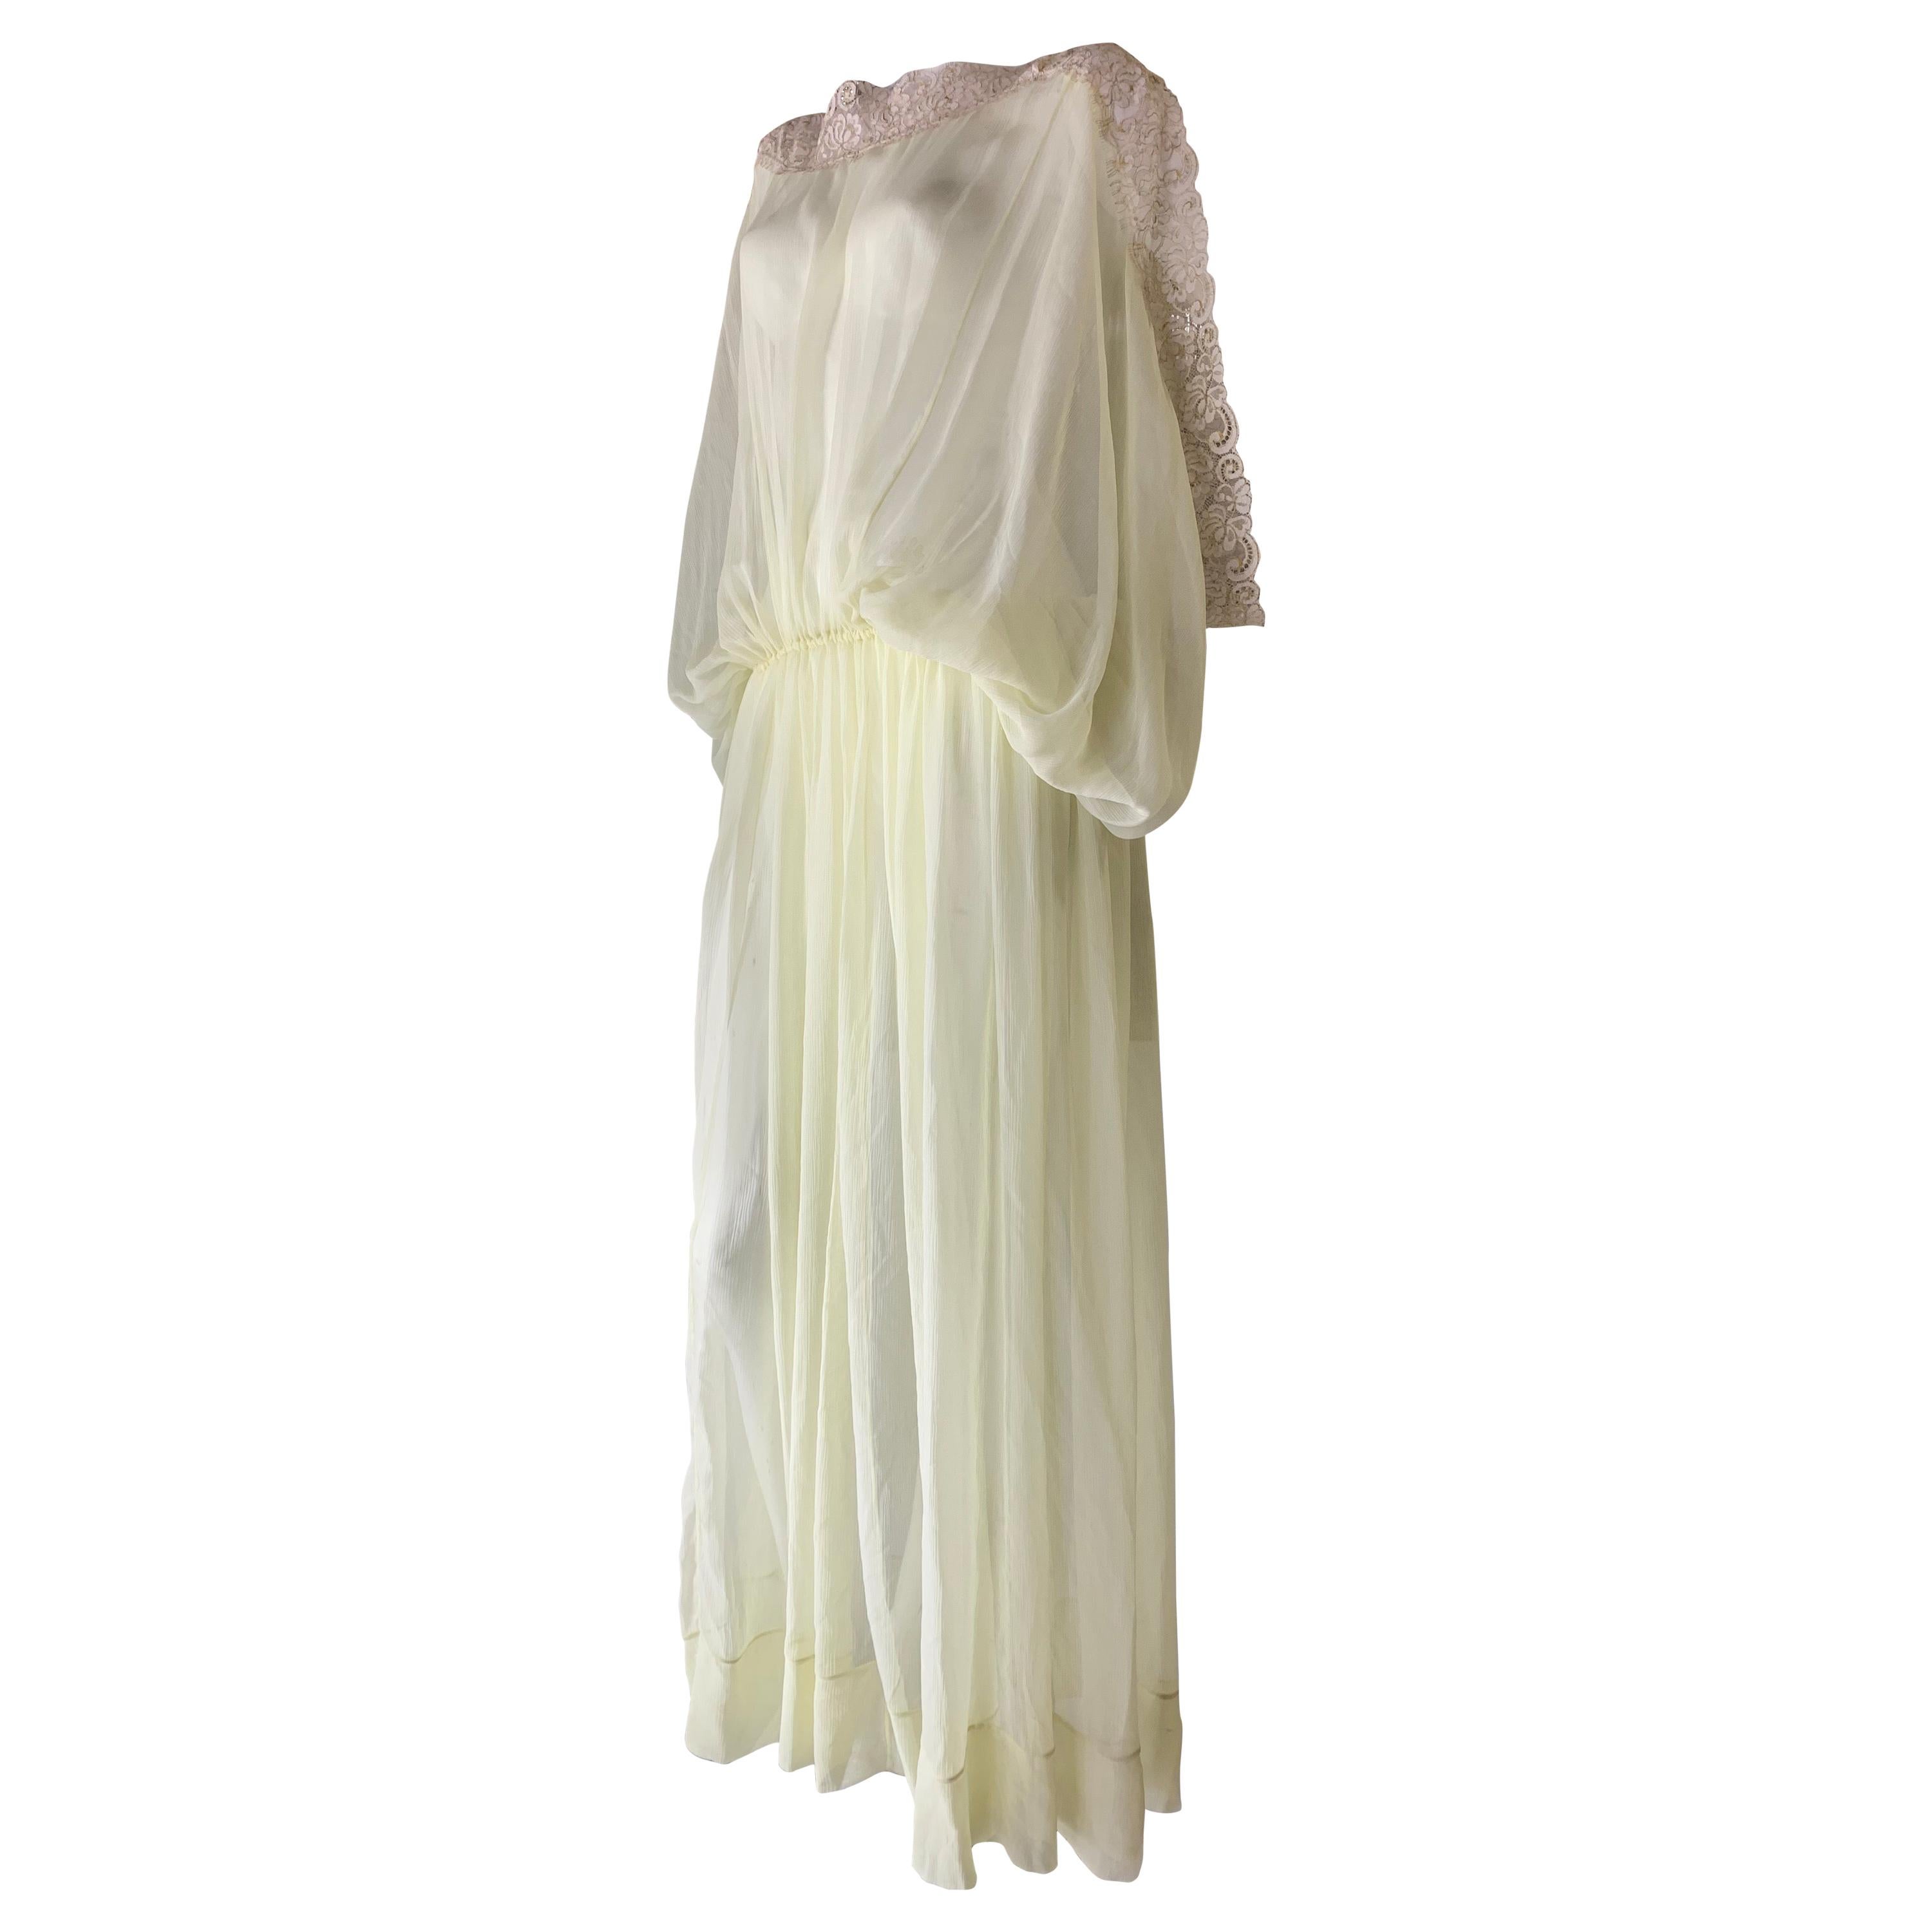 Torso Creations Lemon Silk Chiffon Goddess Gown W/ Soft Gold Metallic Lace Trim